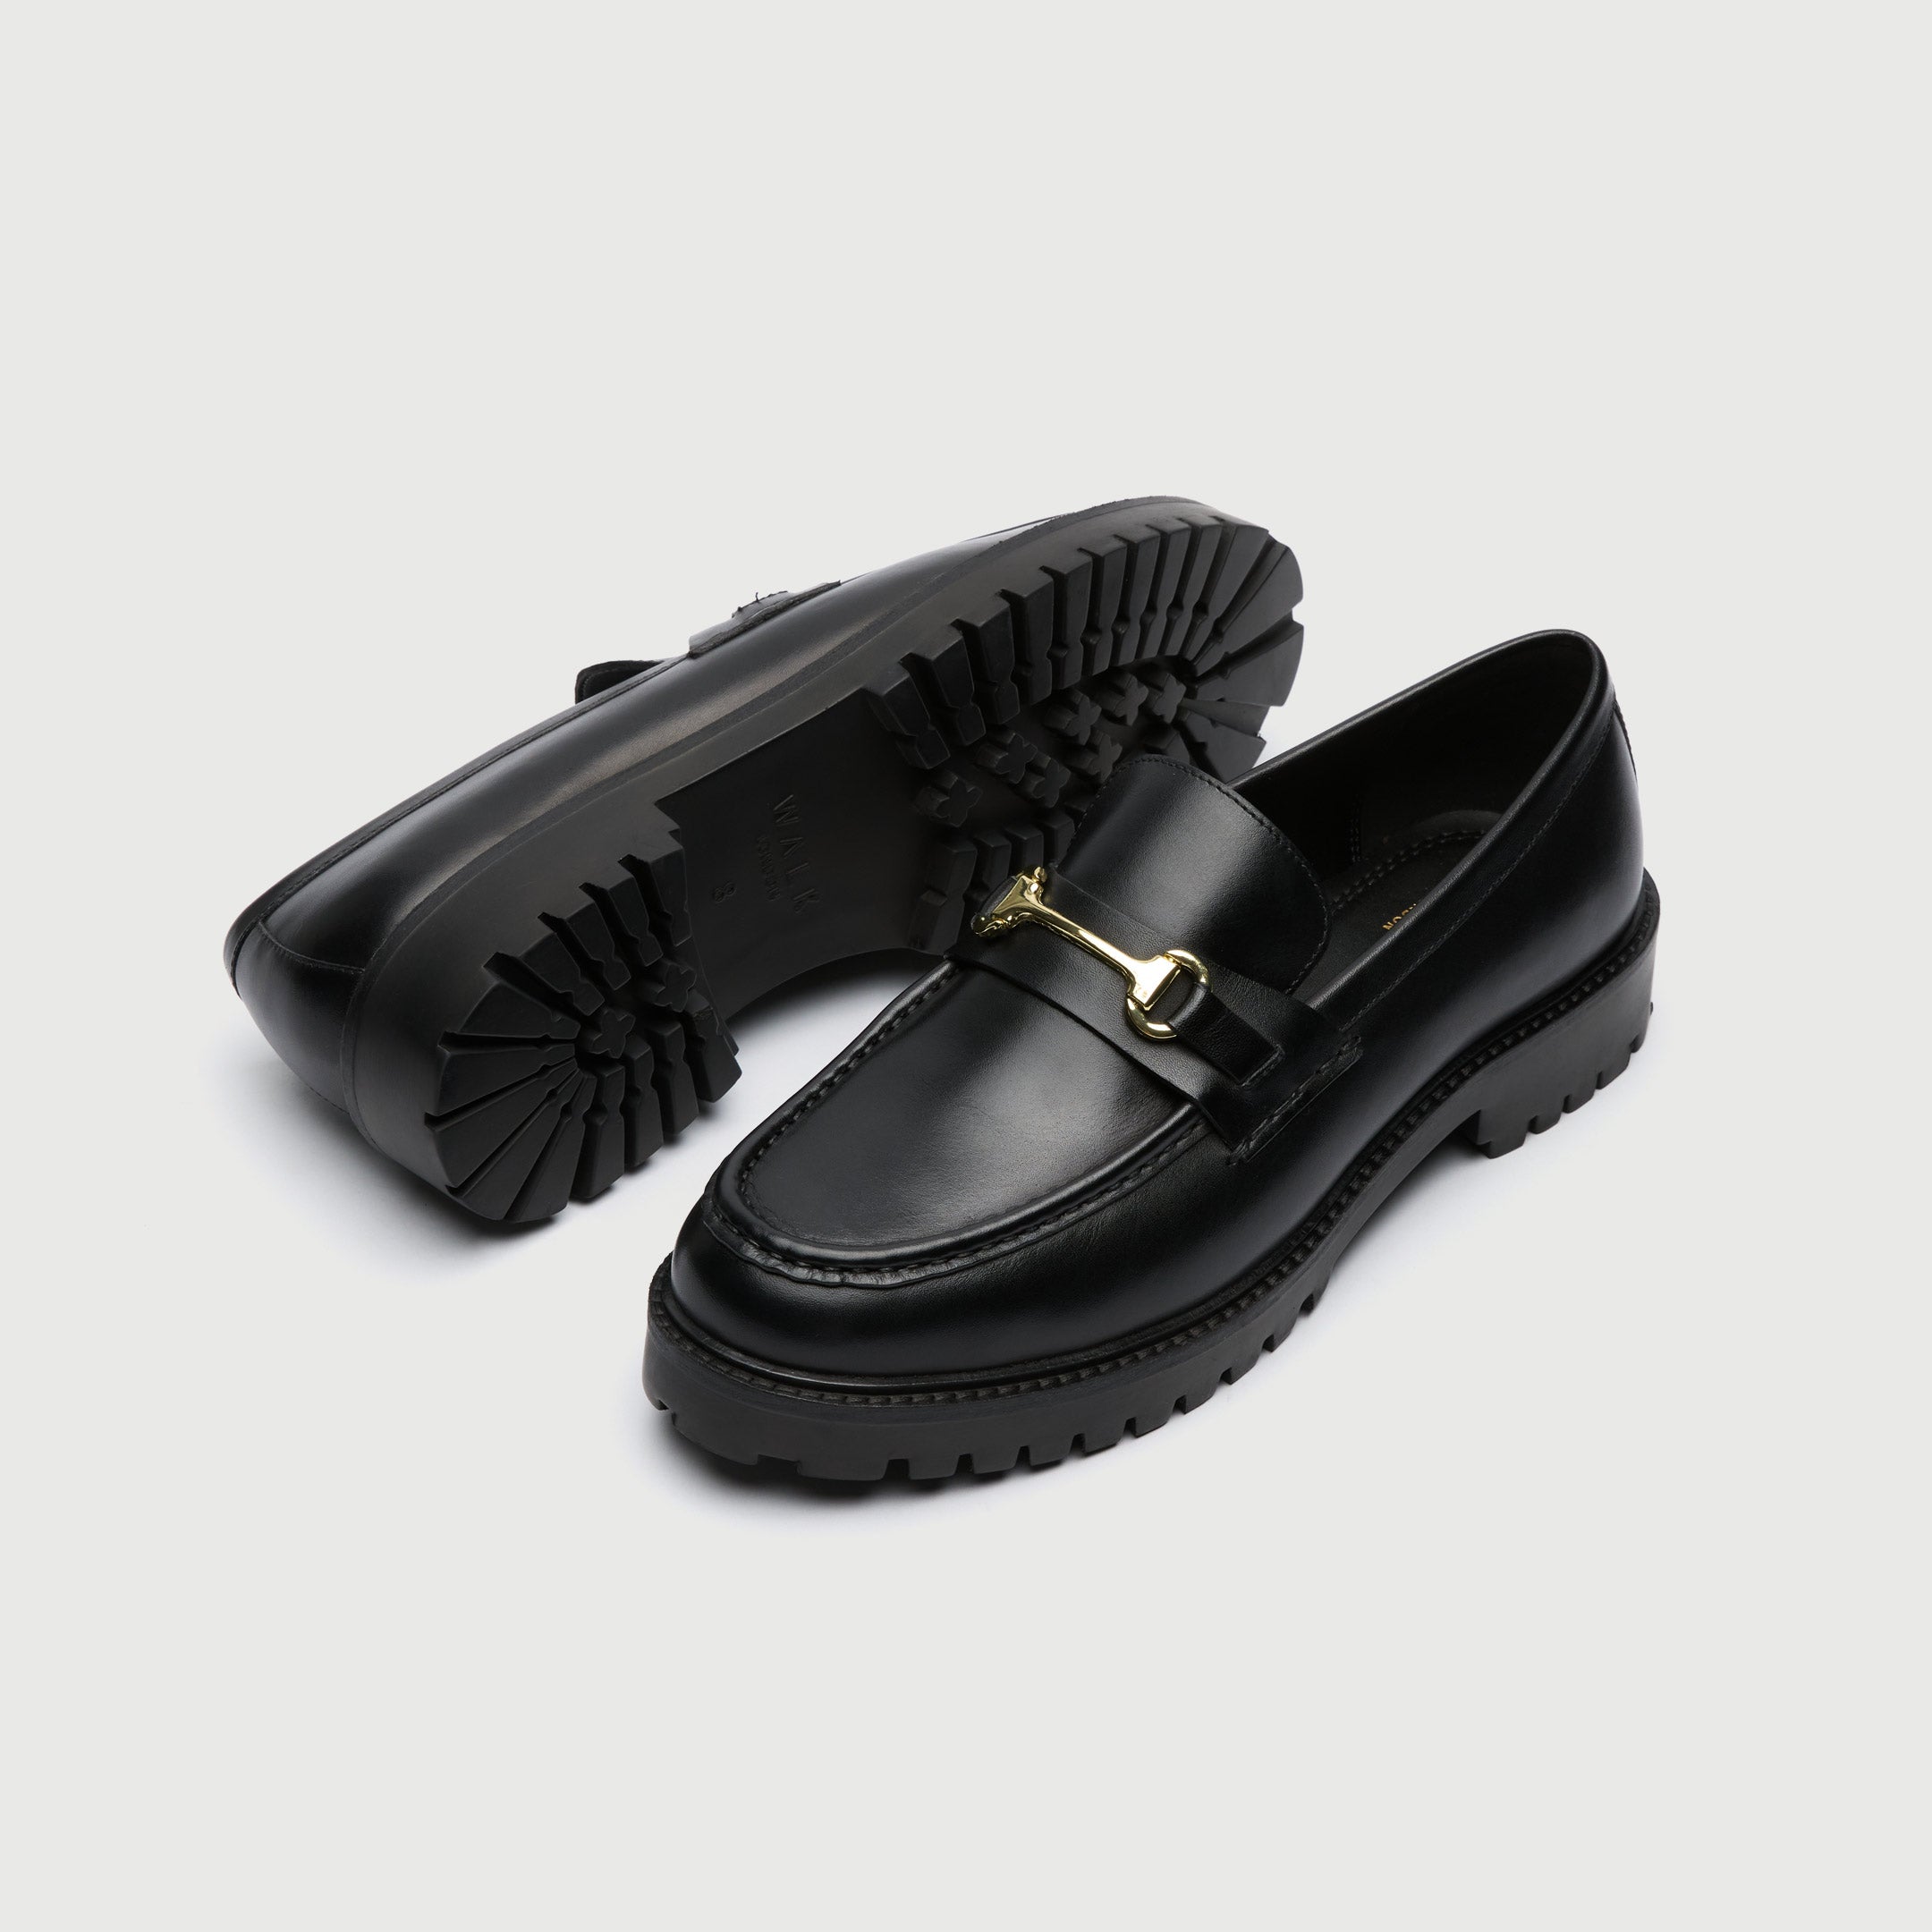 WALK London Sean Trim Loafer Black Leather